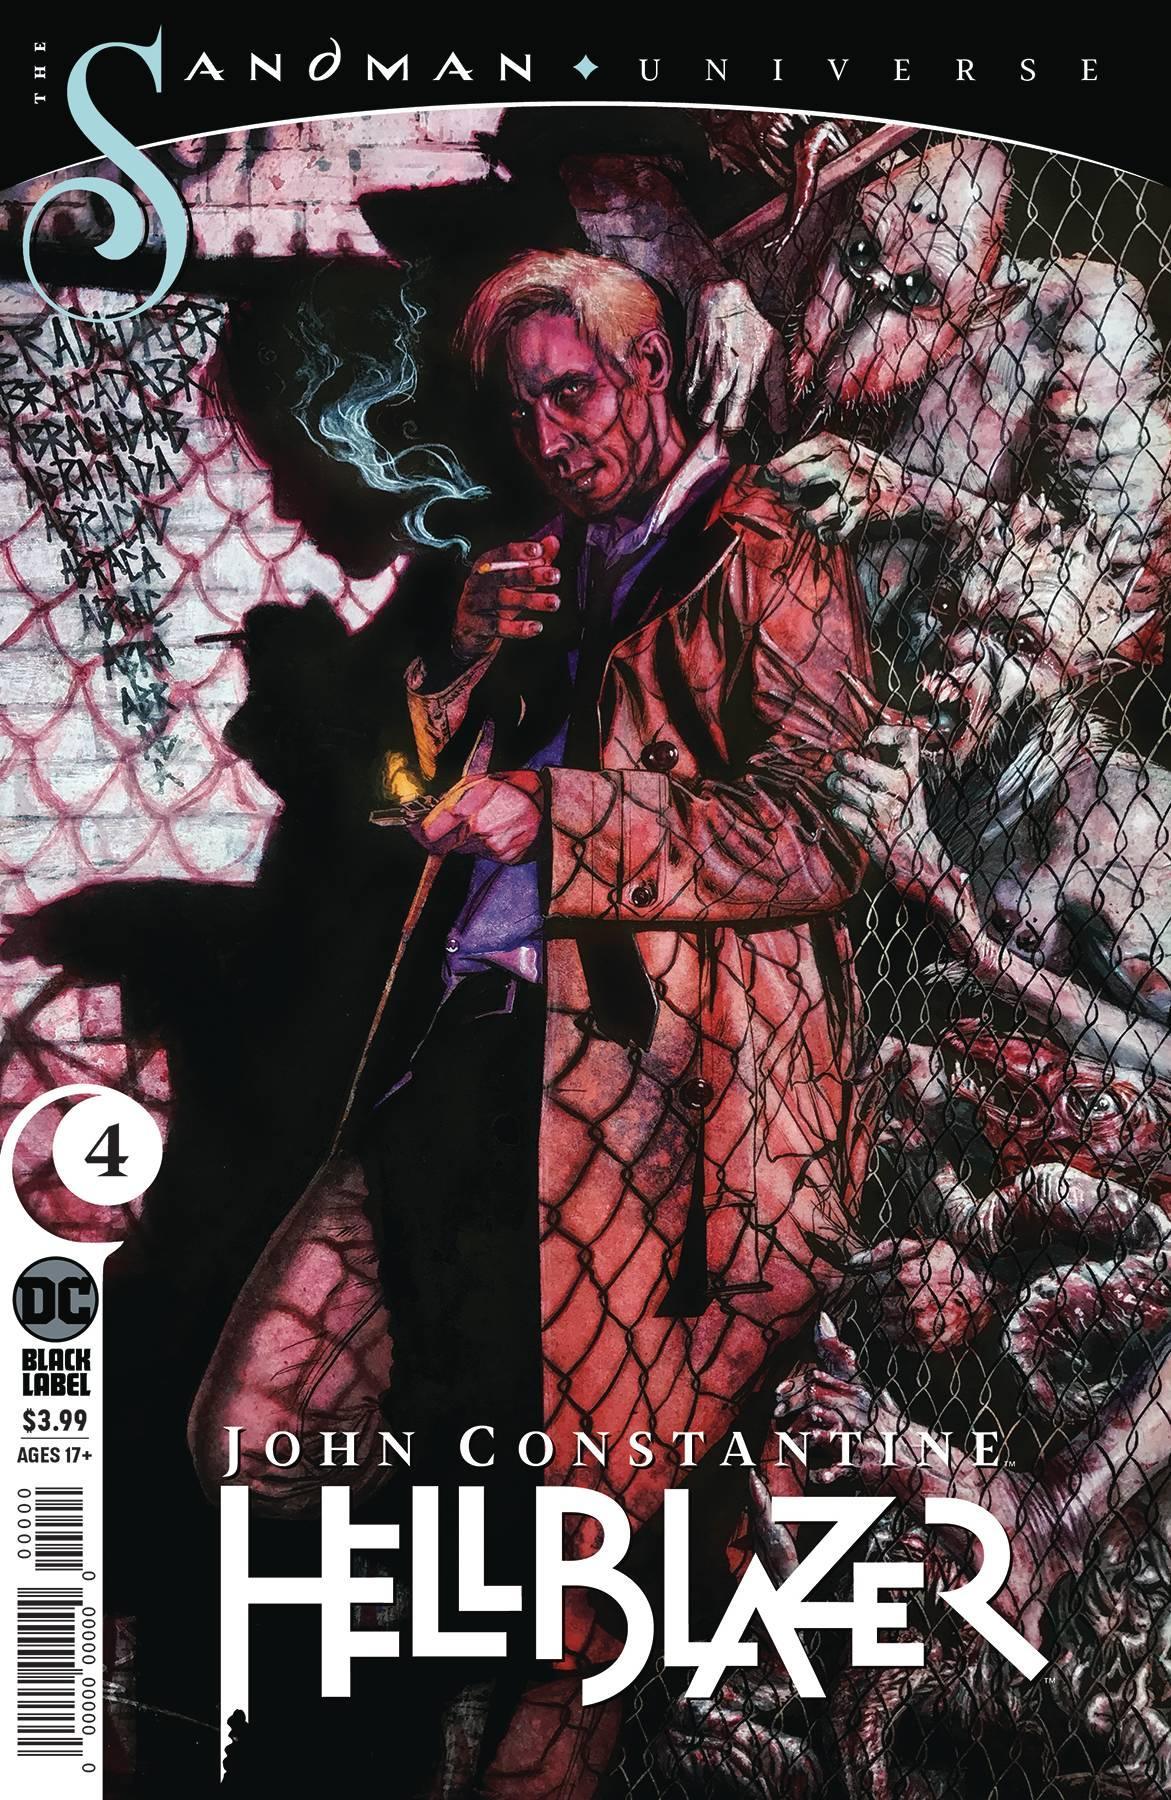 JOHN CONSTANTINE HELLBLAZER #4 - Kings Comics